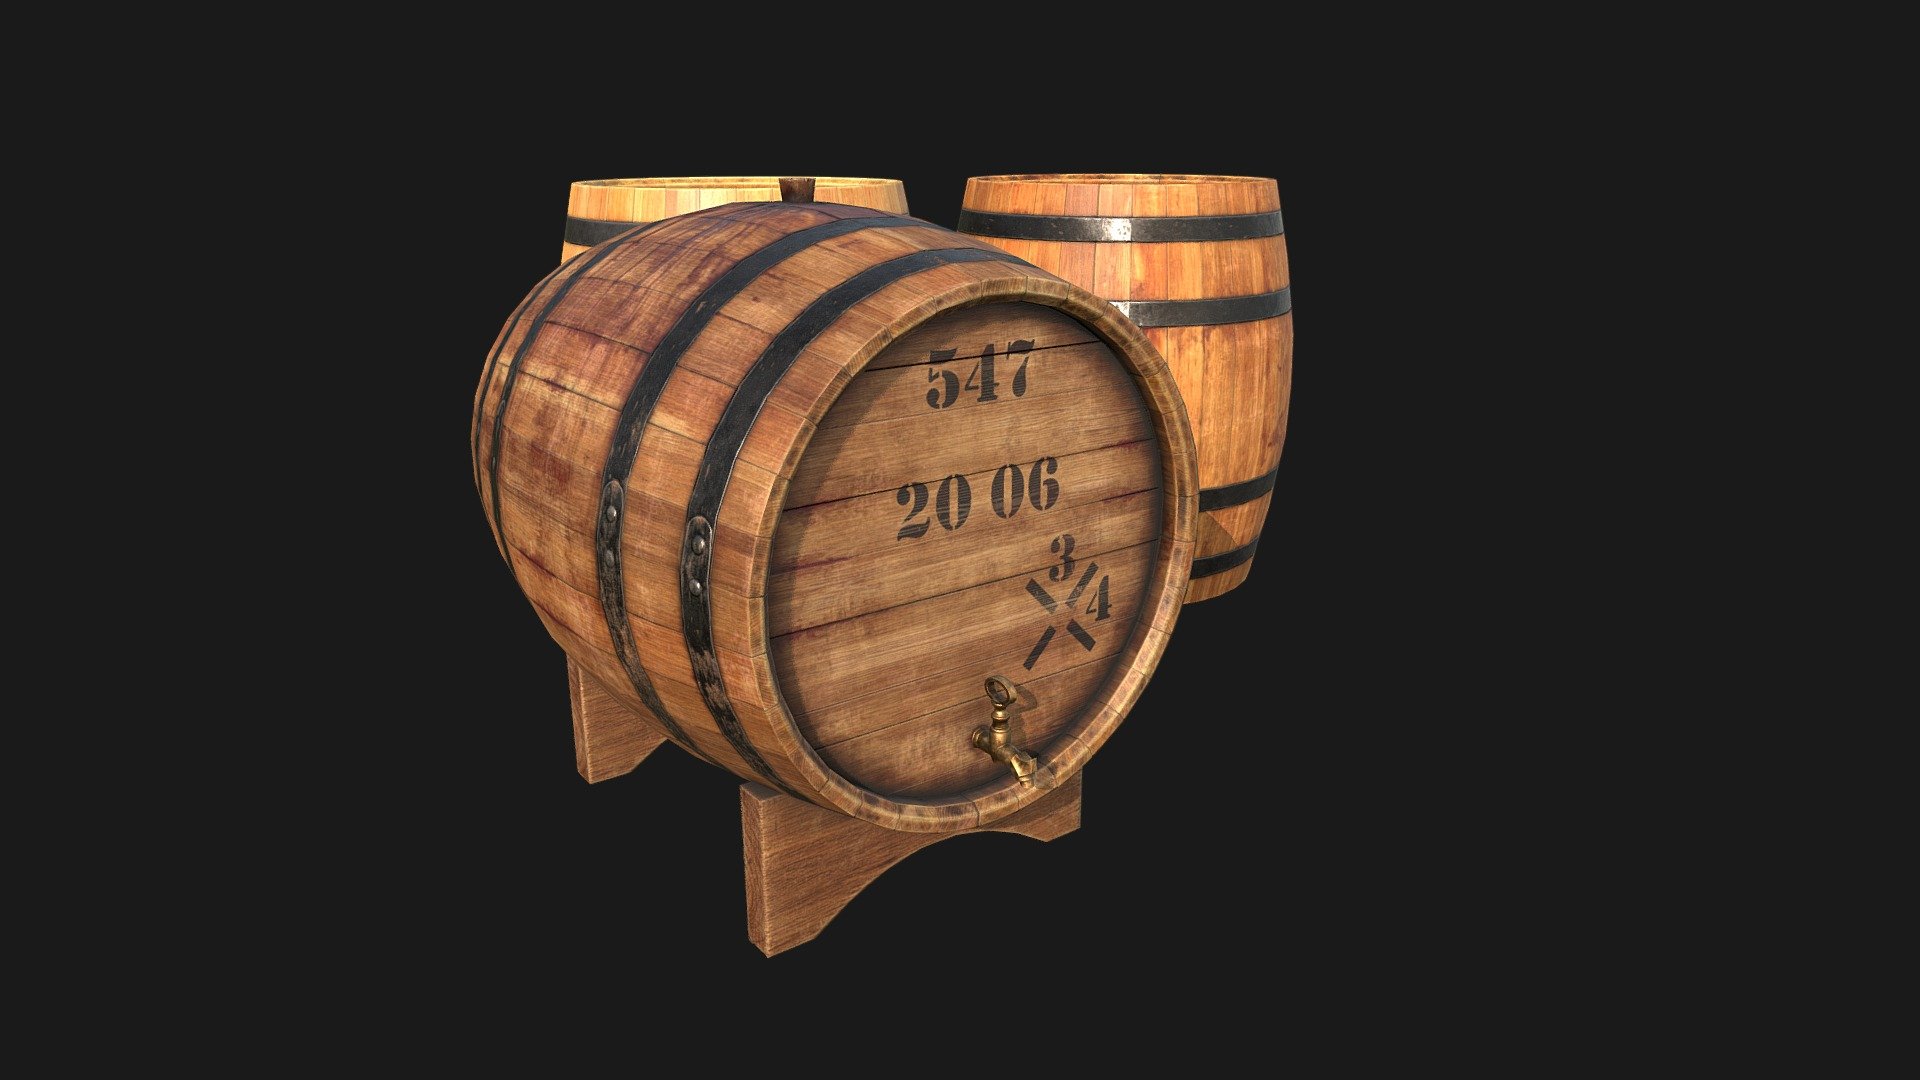 The best house for wine is a wooden barrel.

Model available on

CGTrader
-link removed-

3DExport
-link removed-

Turbosquid
-link removed- - Wooden wine barrels - 3D model by Igor Novik (@artinstrouke) 3d model